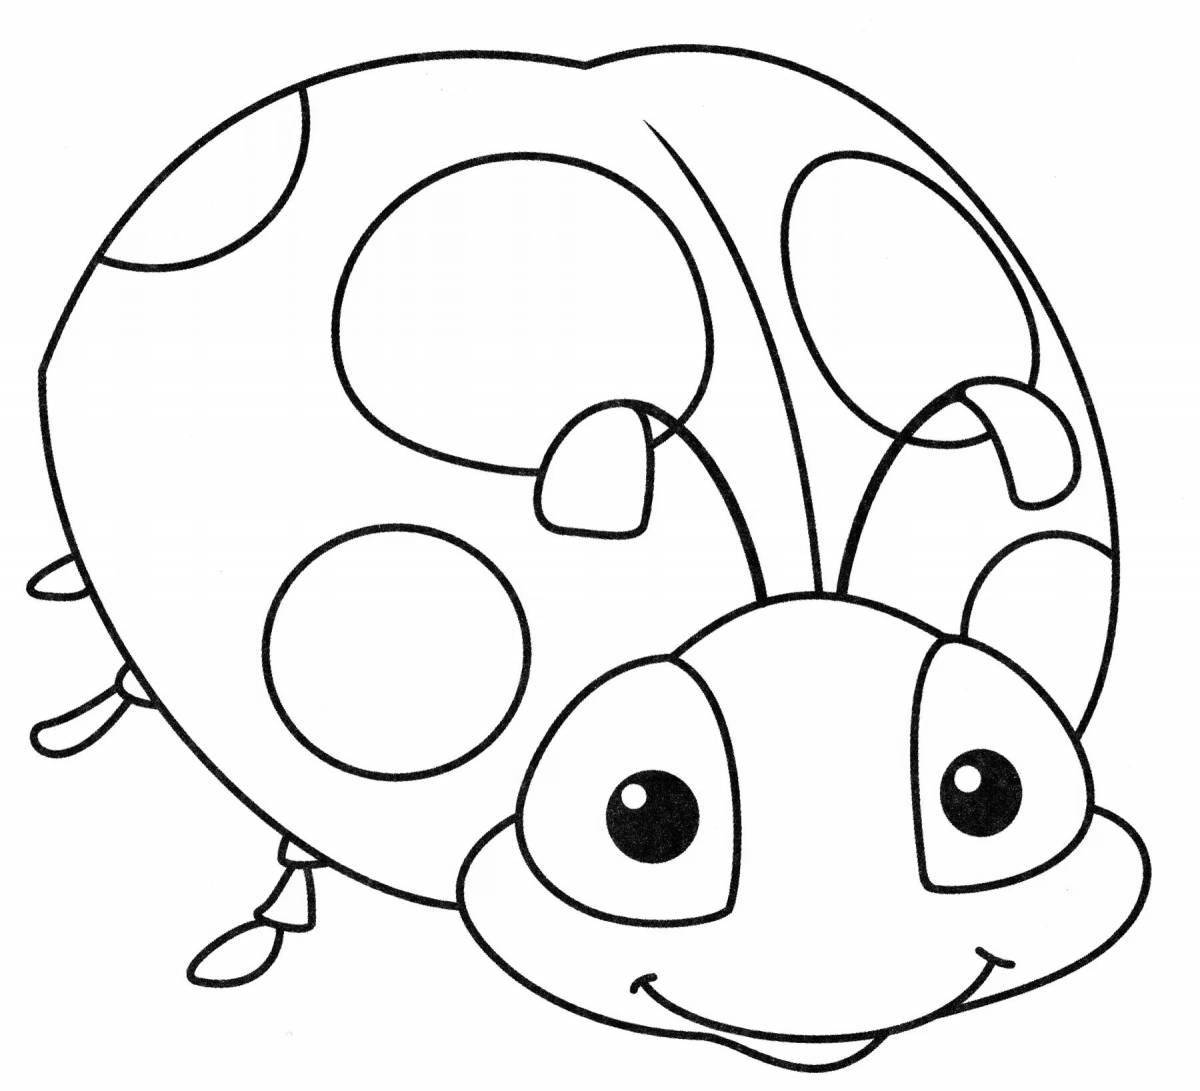 Delightful drawing of a ladybug